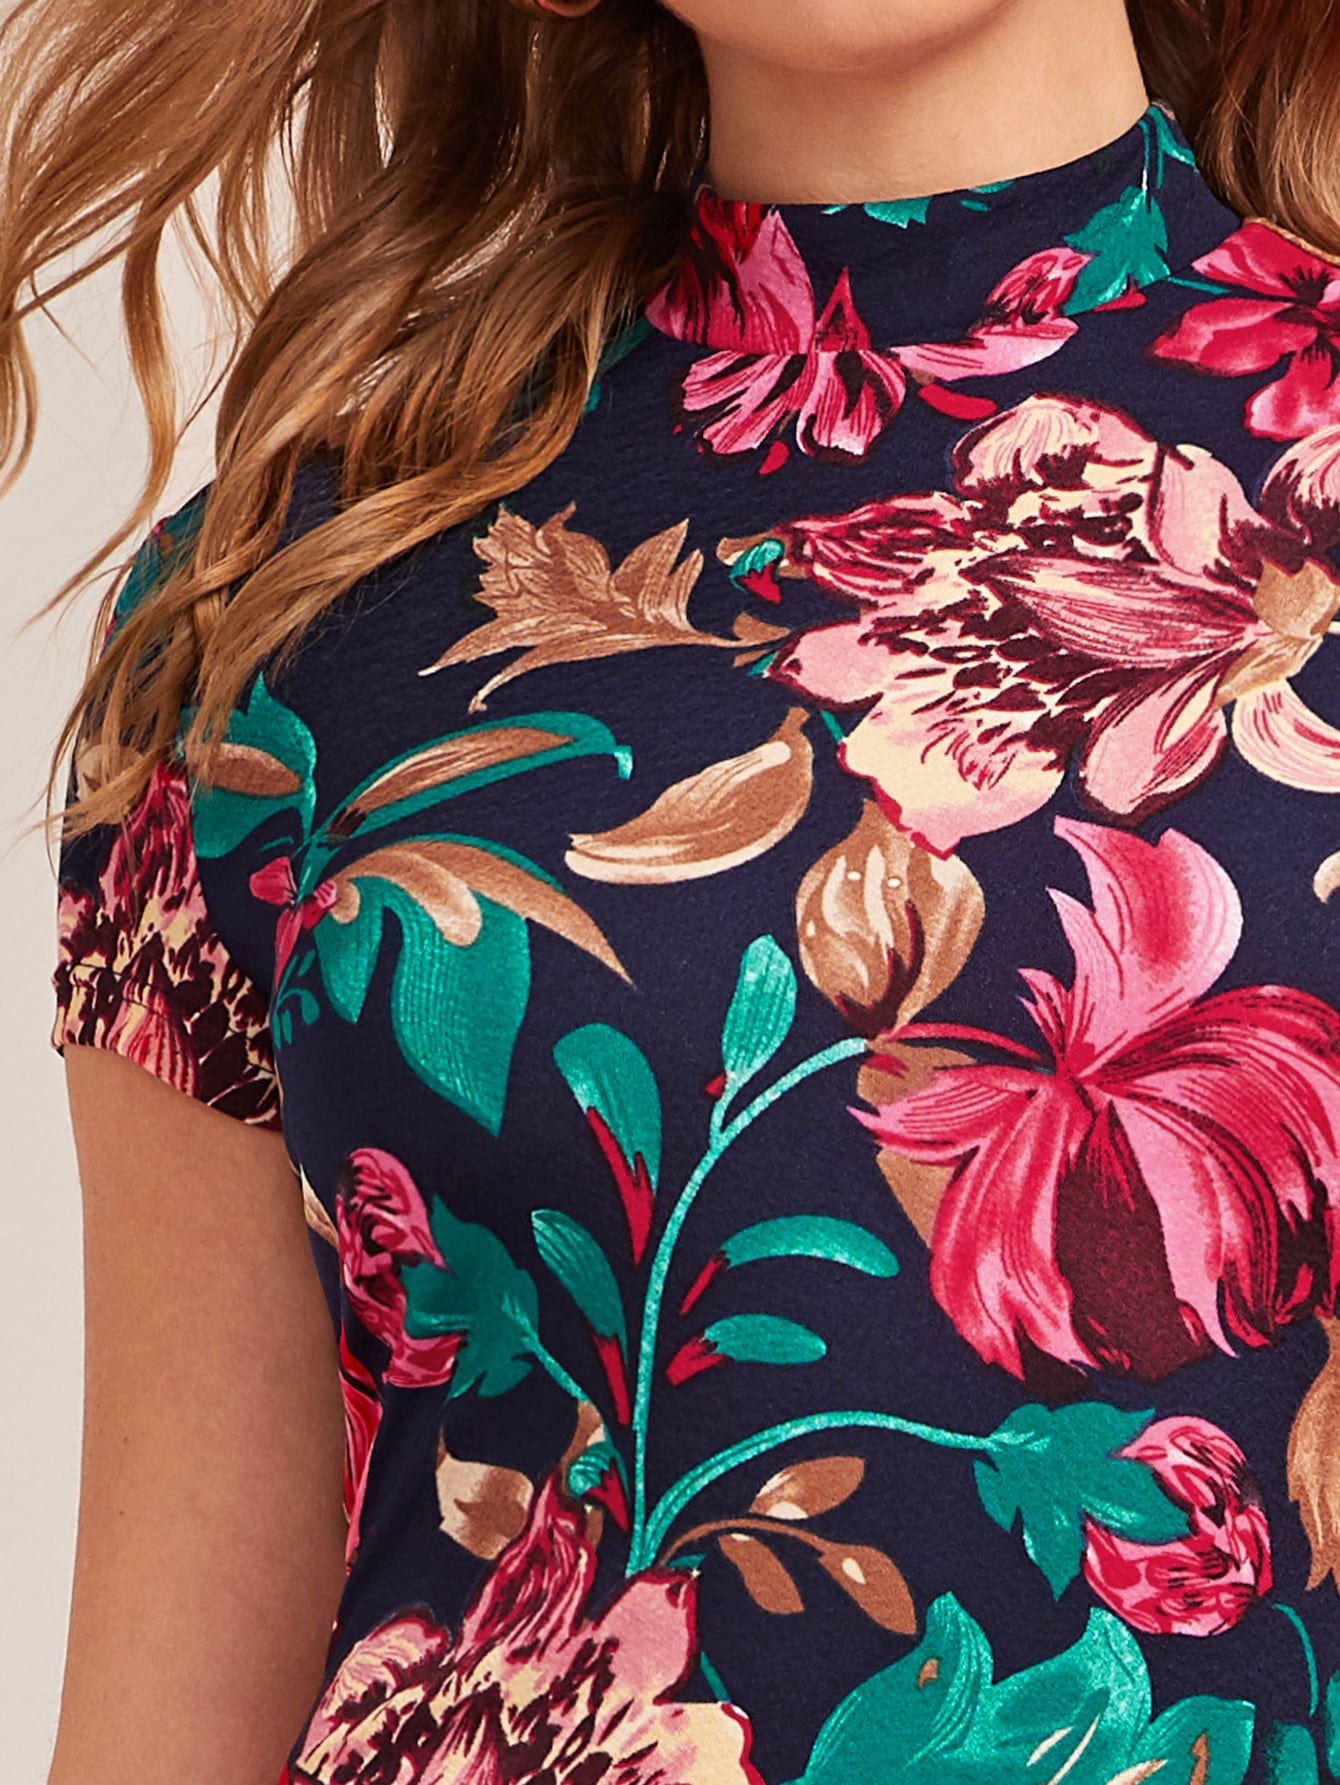 Mock-Neck Form Fitted Floral Print Dress